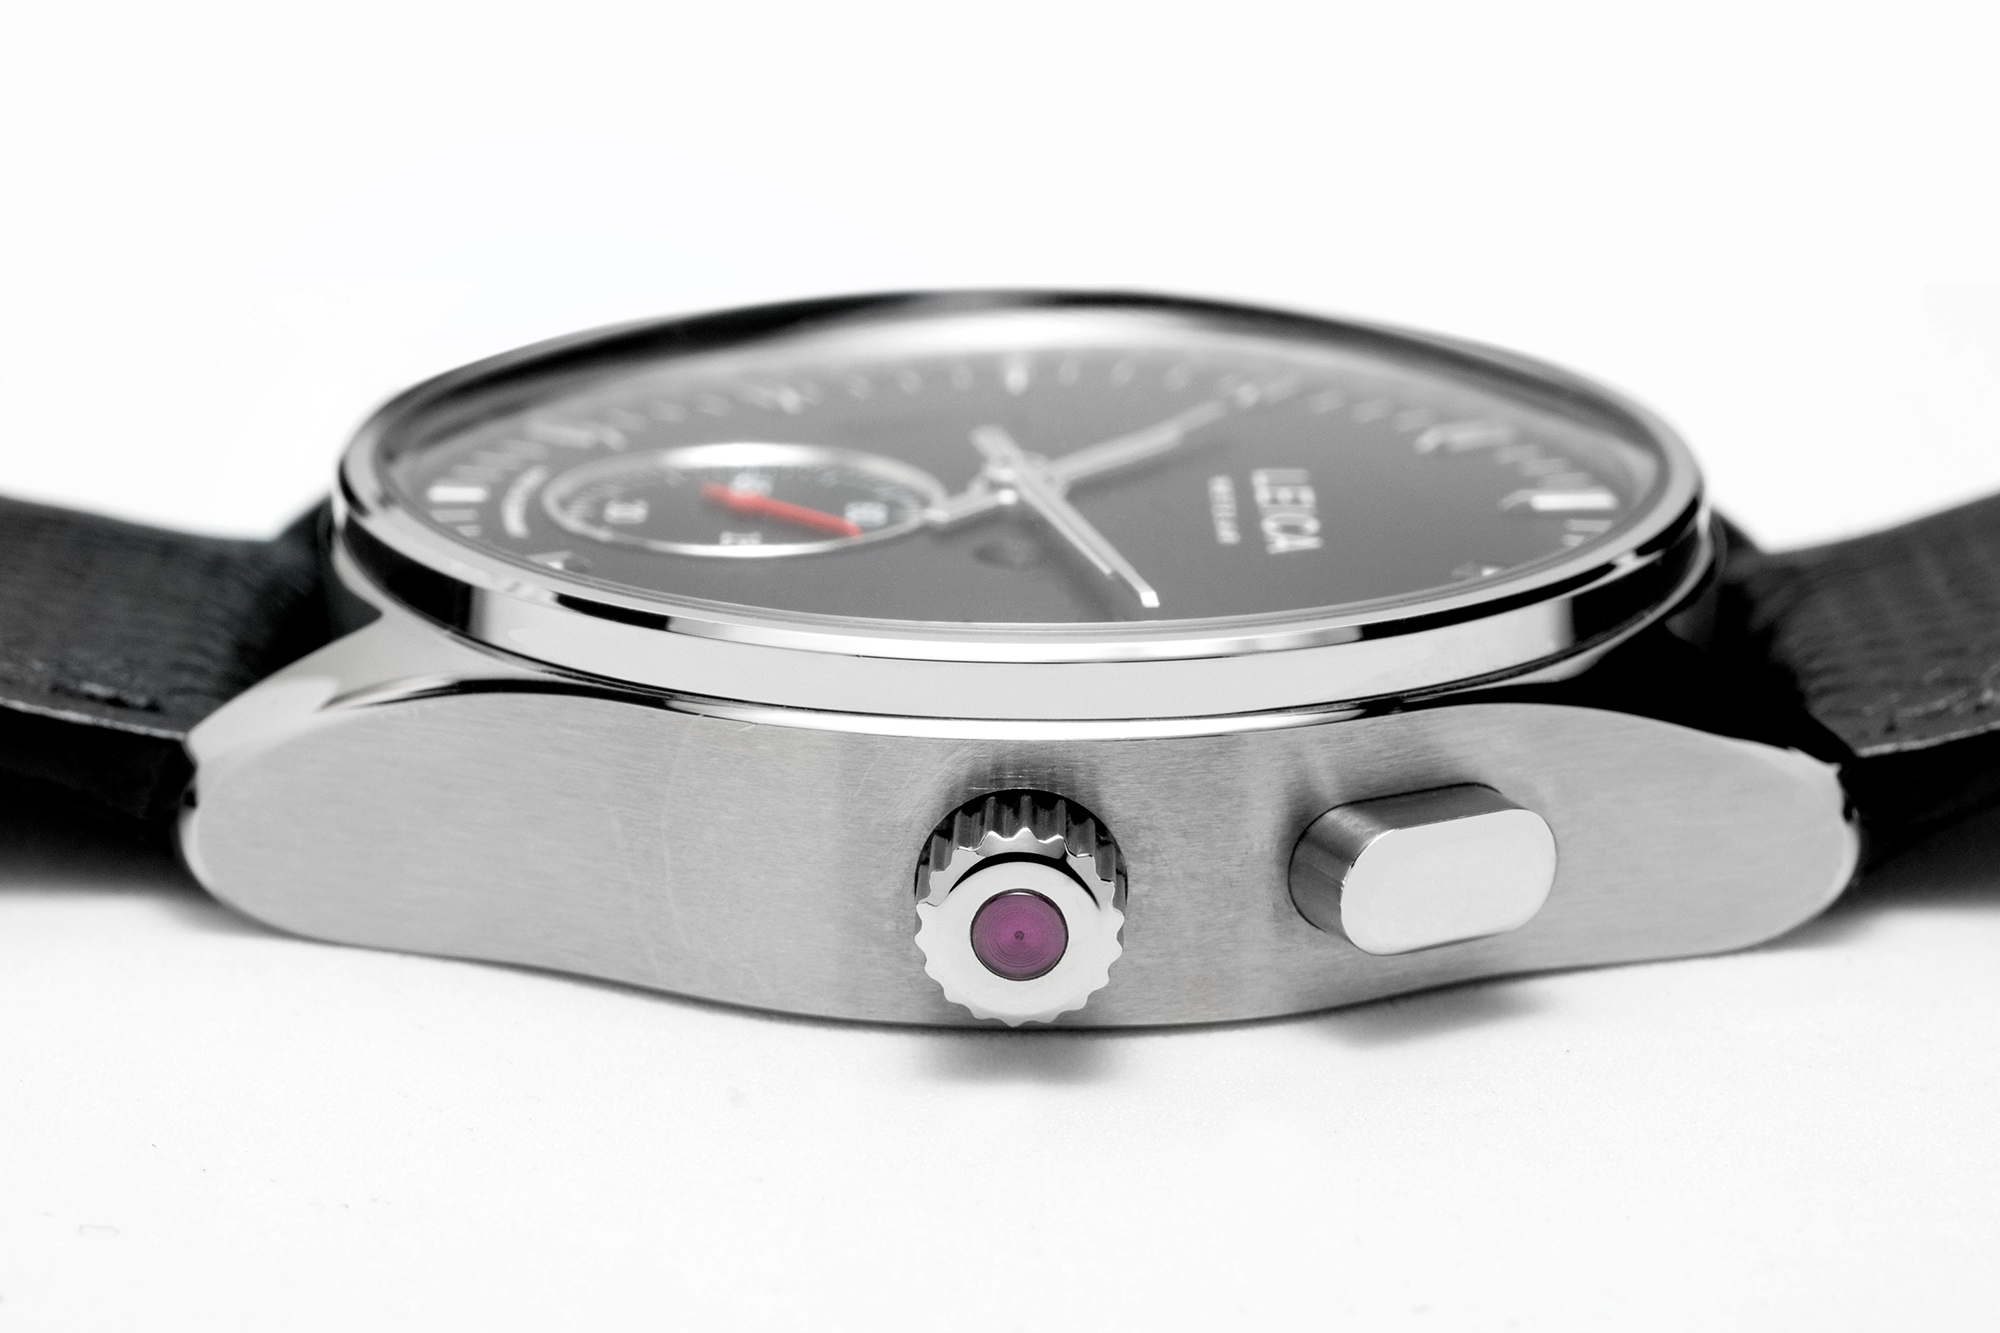 Leica L1 watch pusher